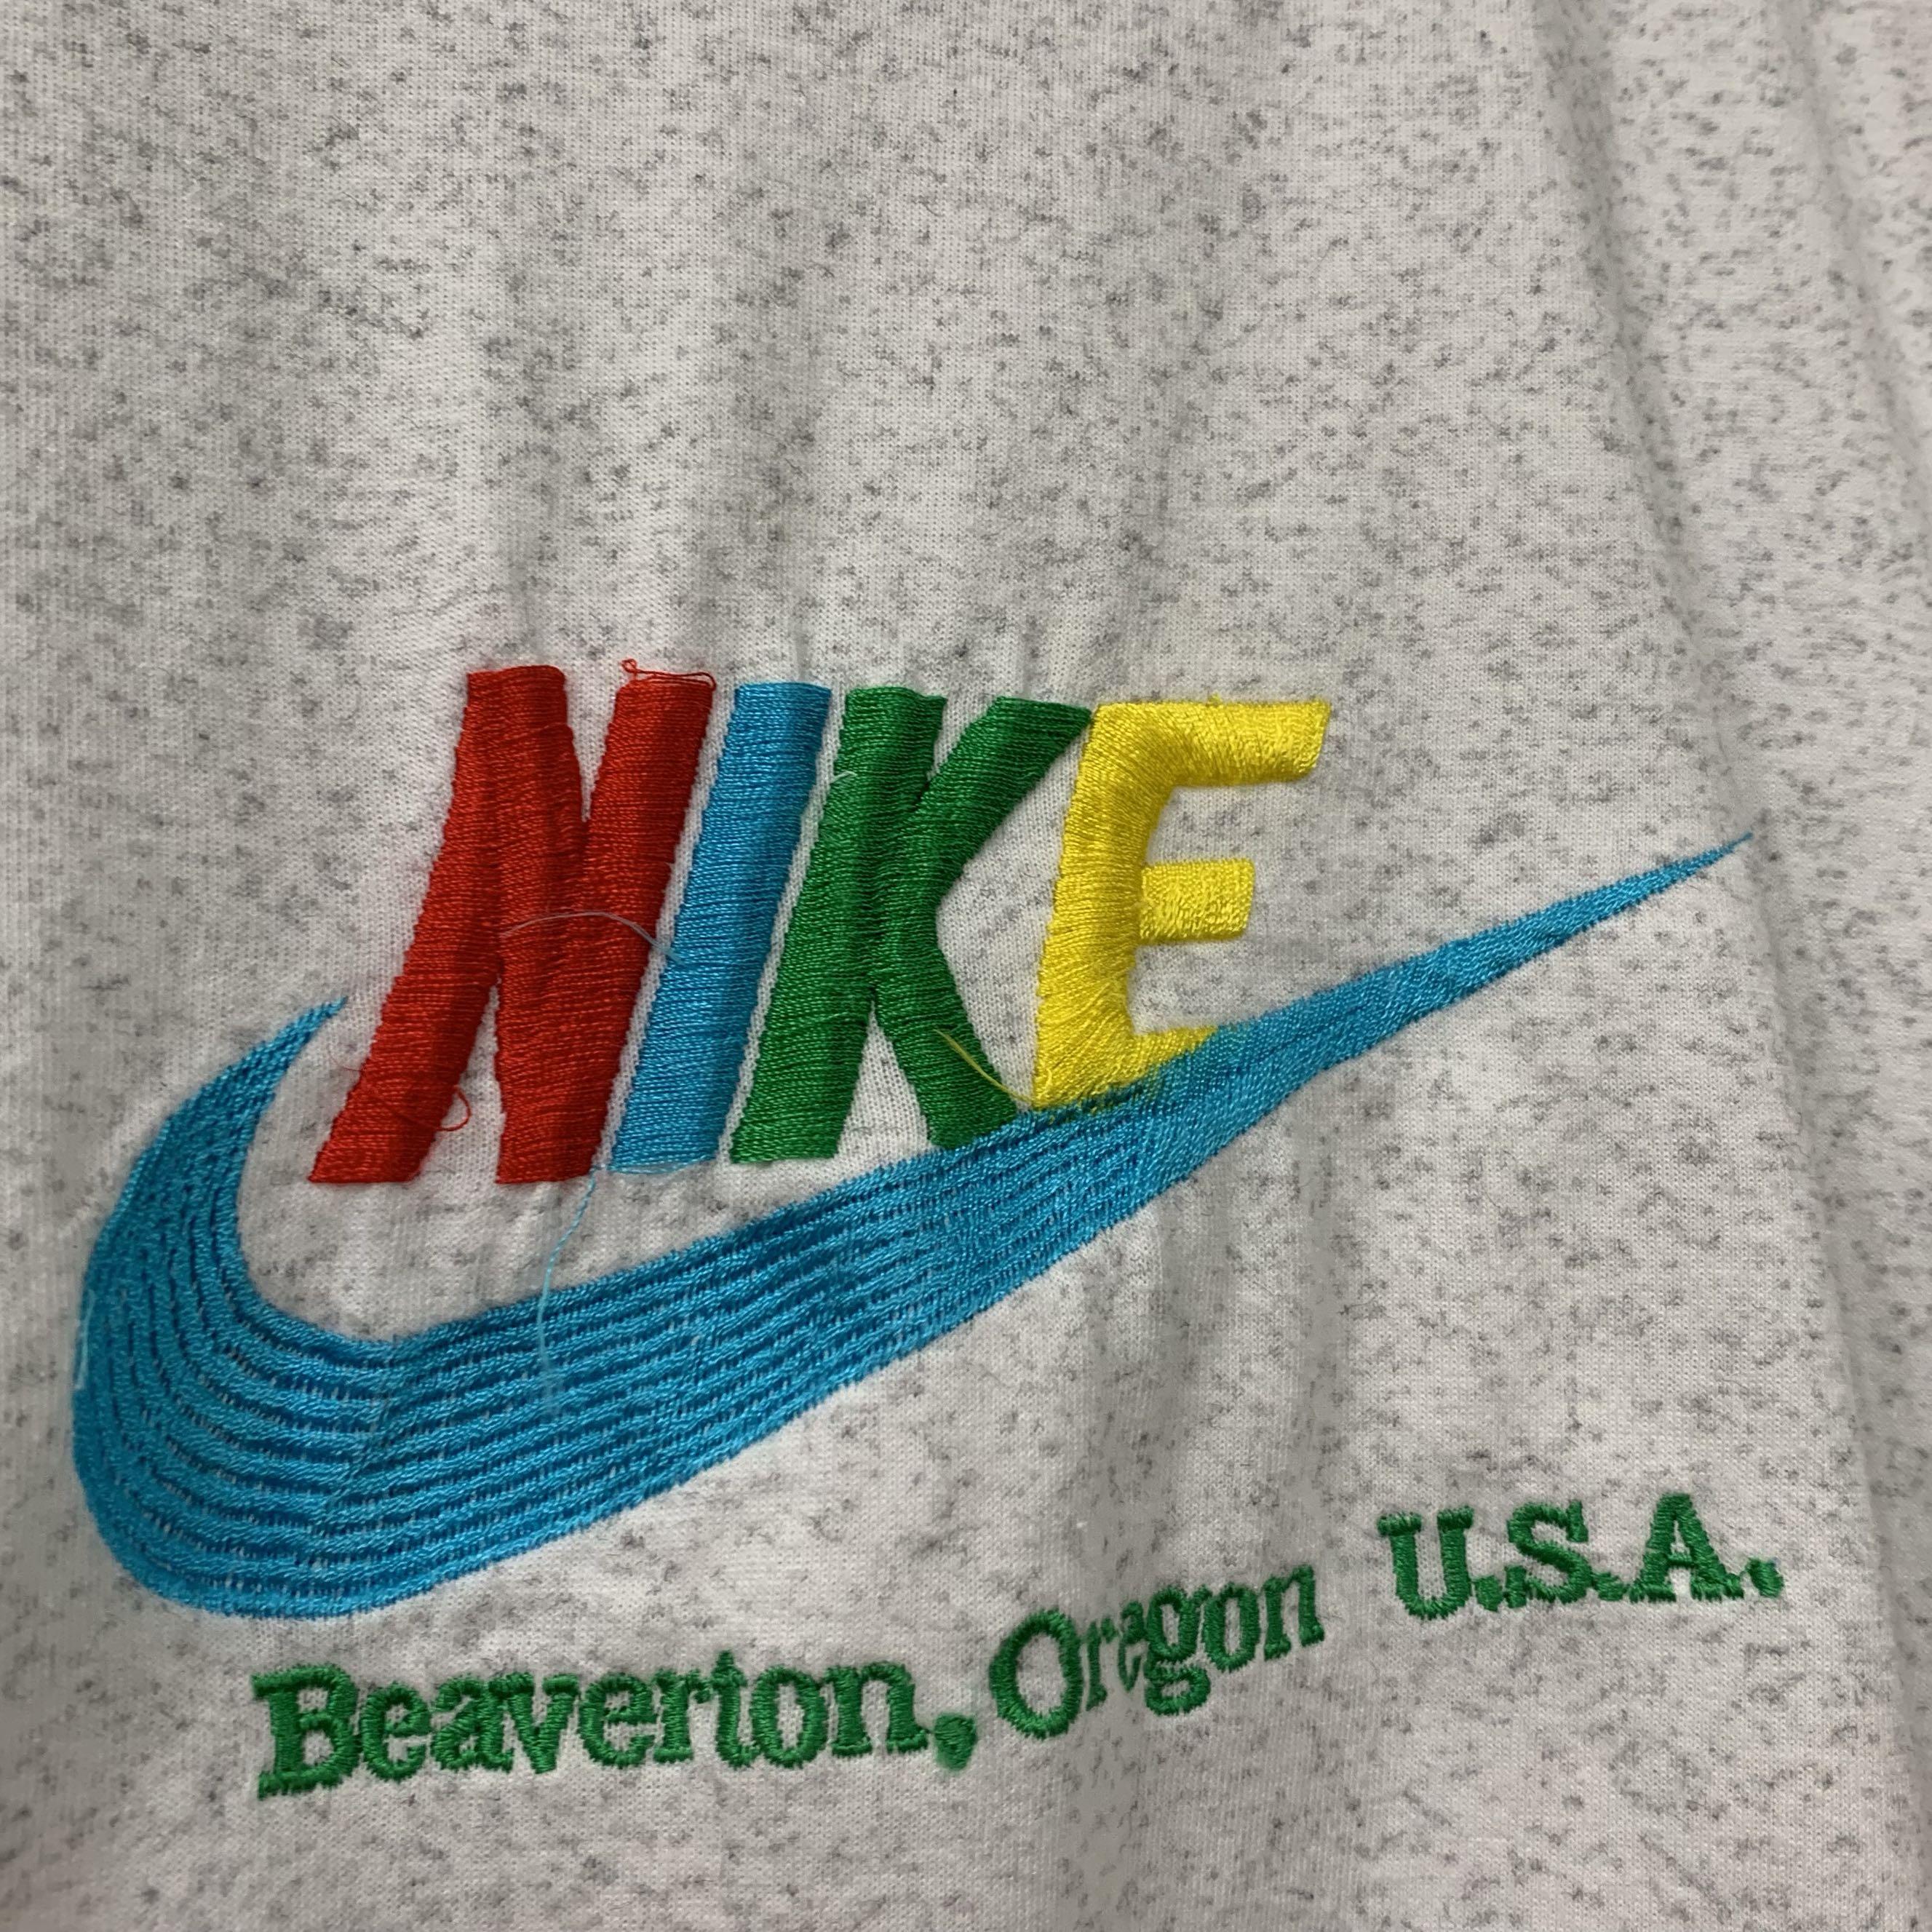 Vintage Nike Oregon Tshirt Women S Fashion Clothes Tops On